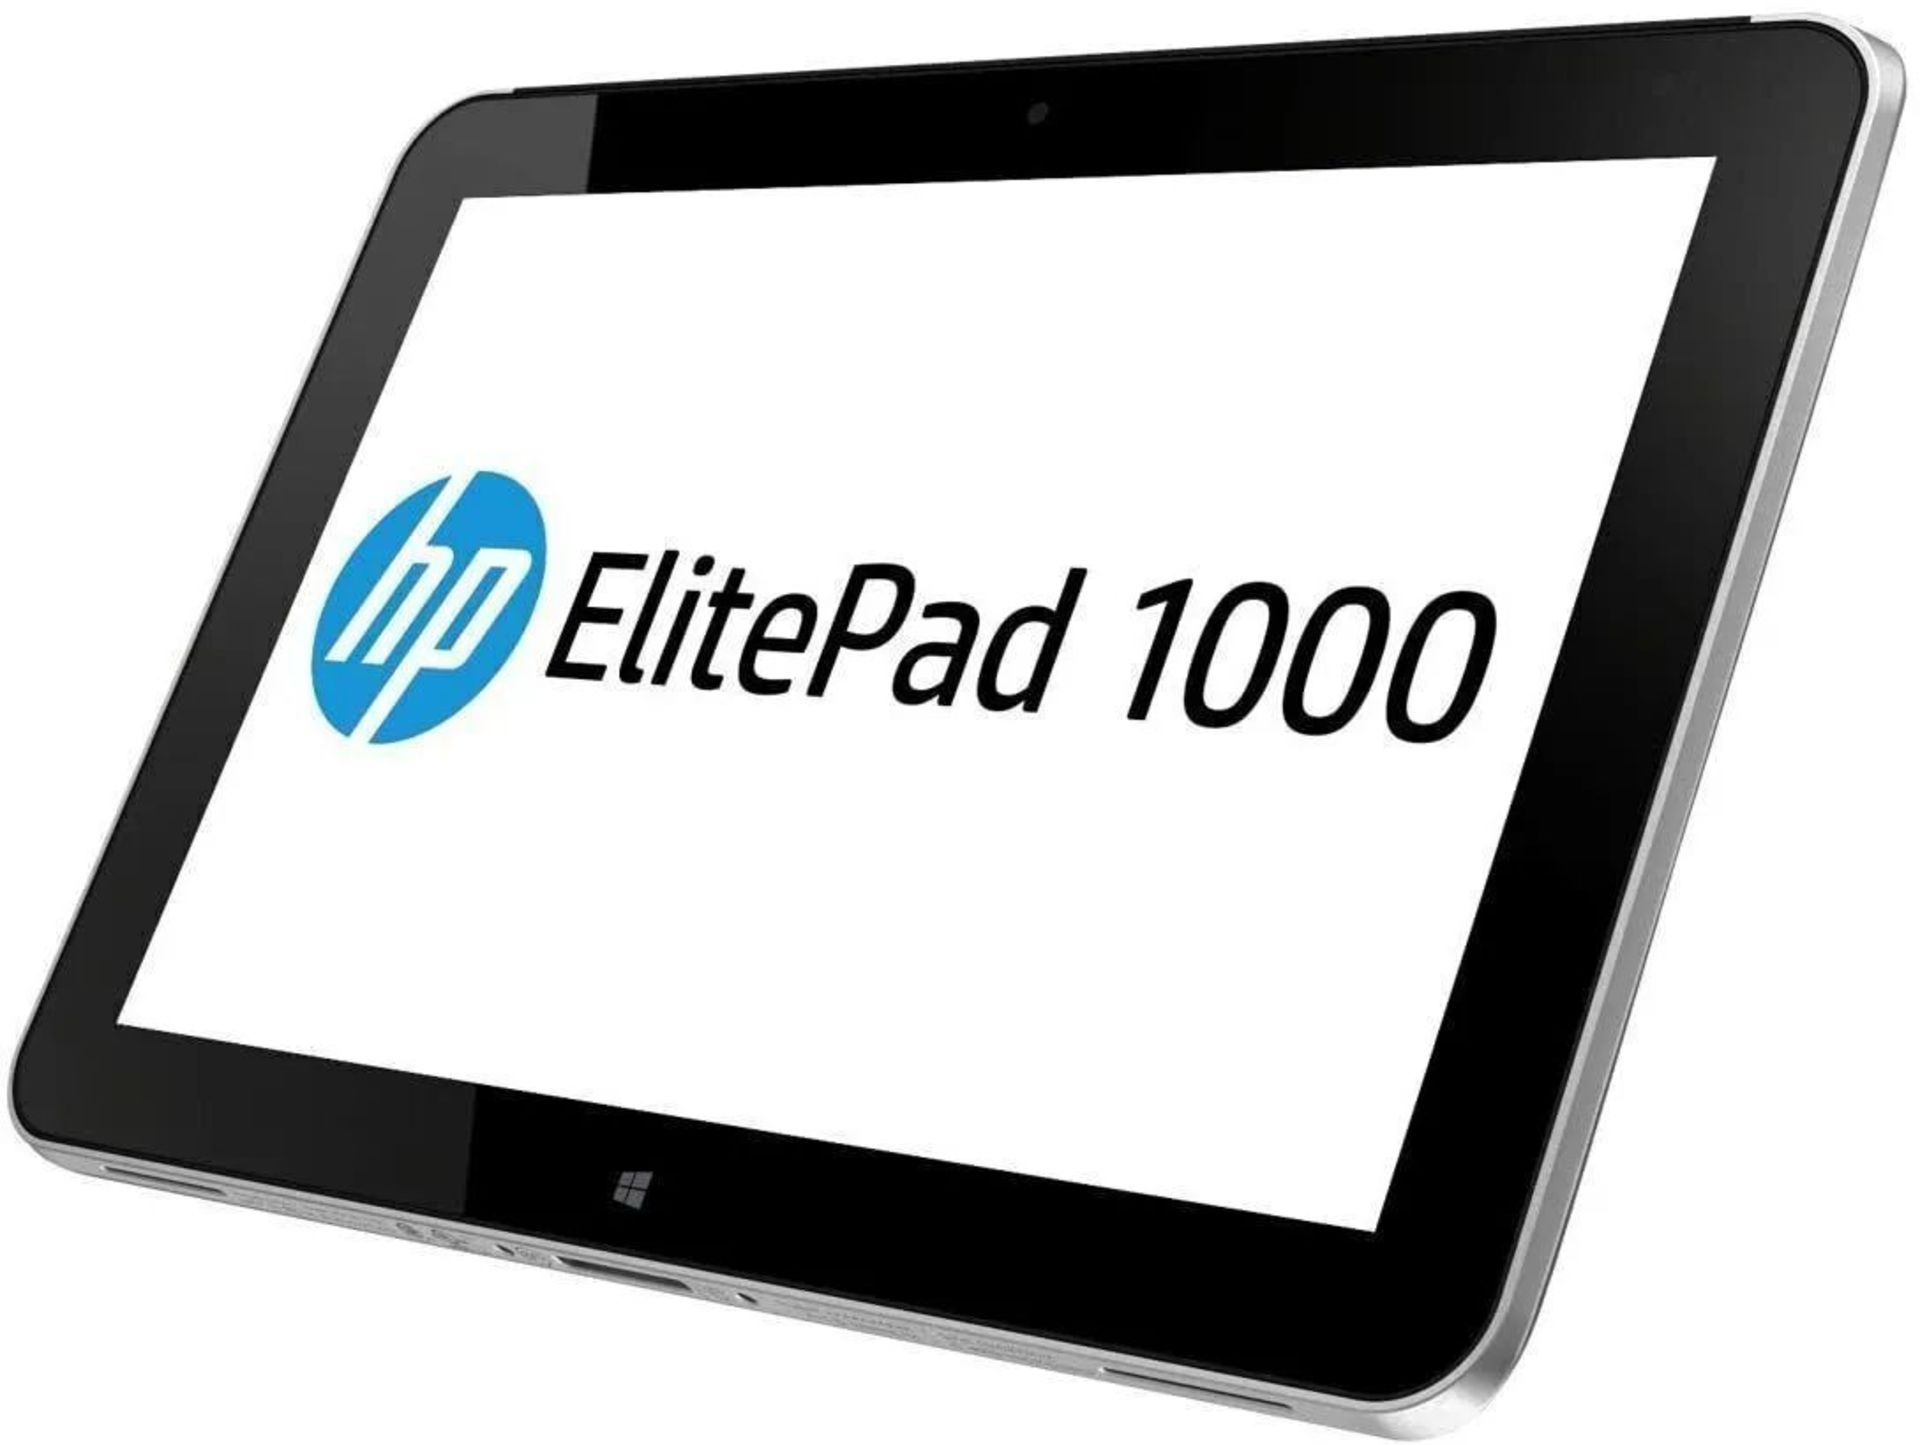 HP ElitePad 1000 G2 Atom Tablet 4G 4GB 64GB SSD Windows 10 Pro Z3795. - P4. RRP £319.99.